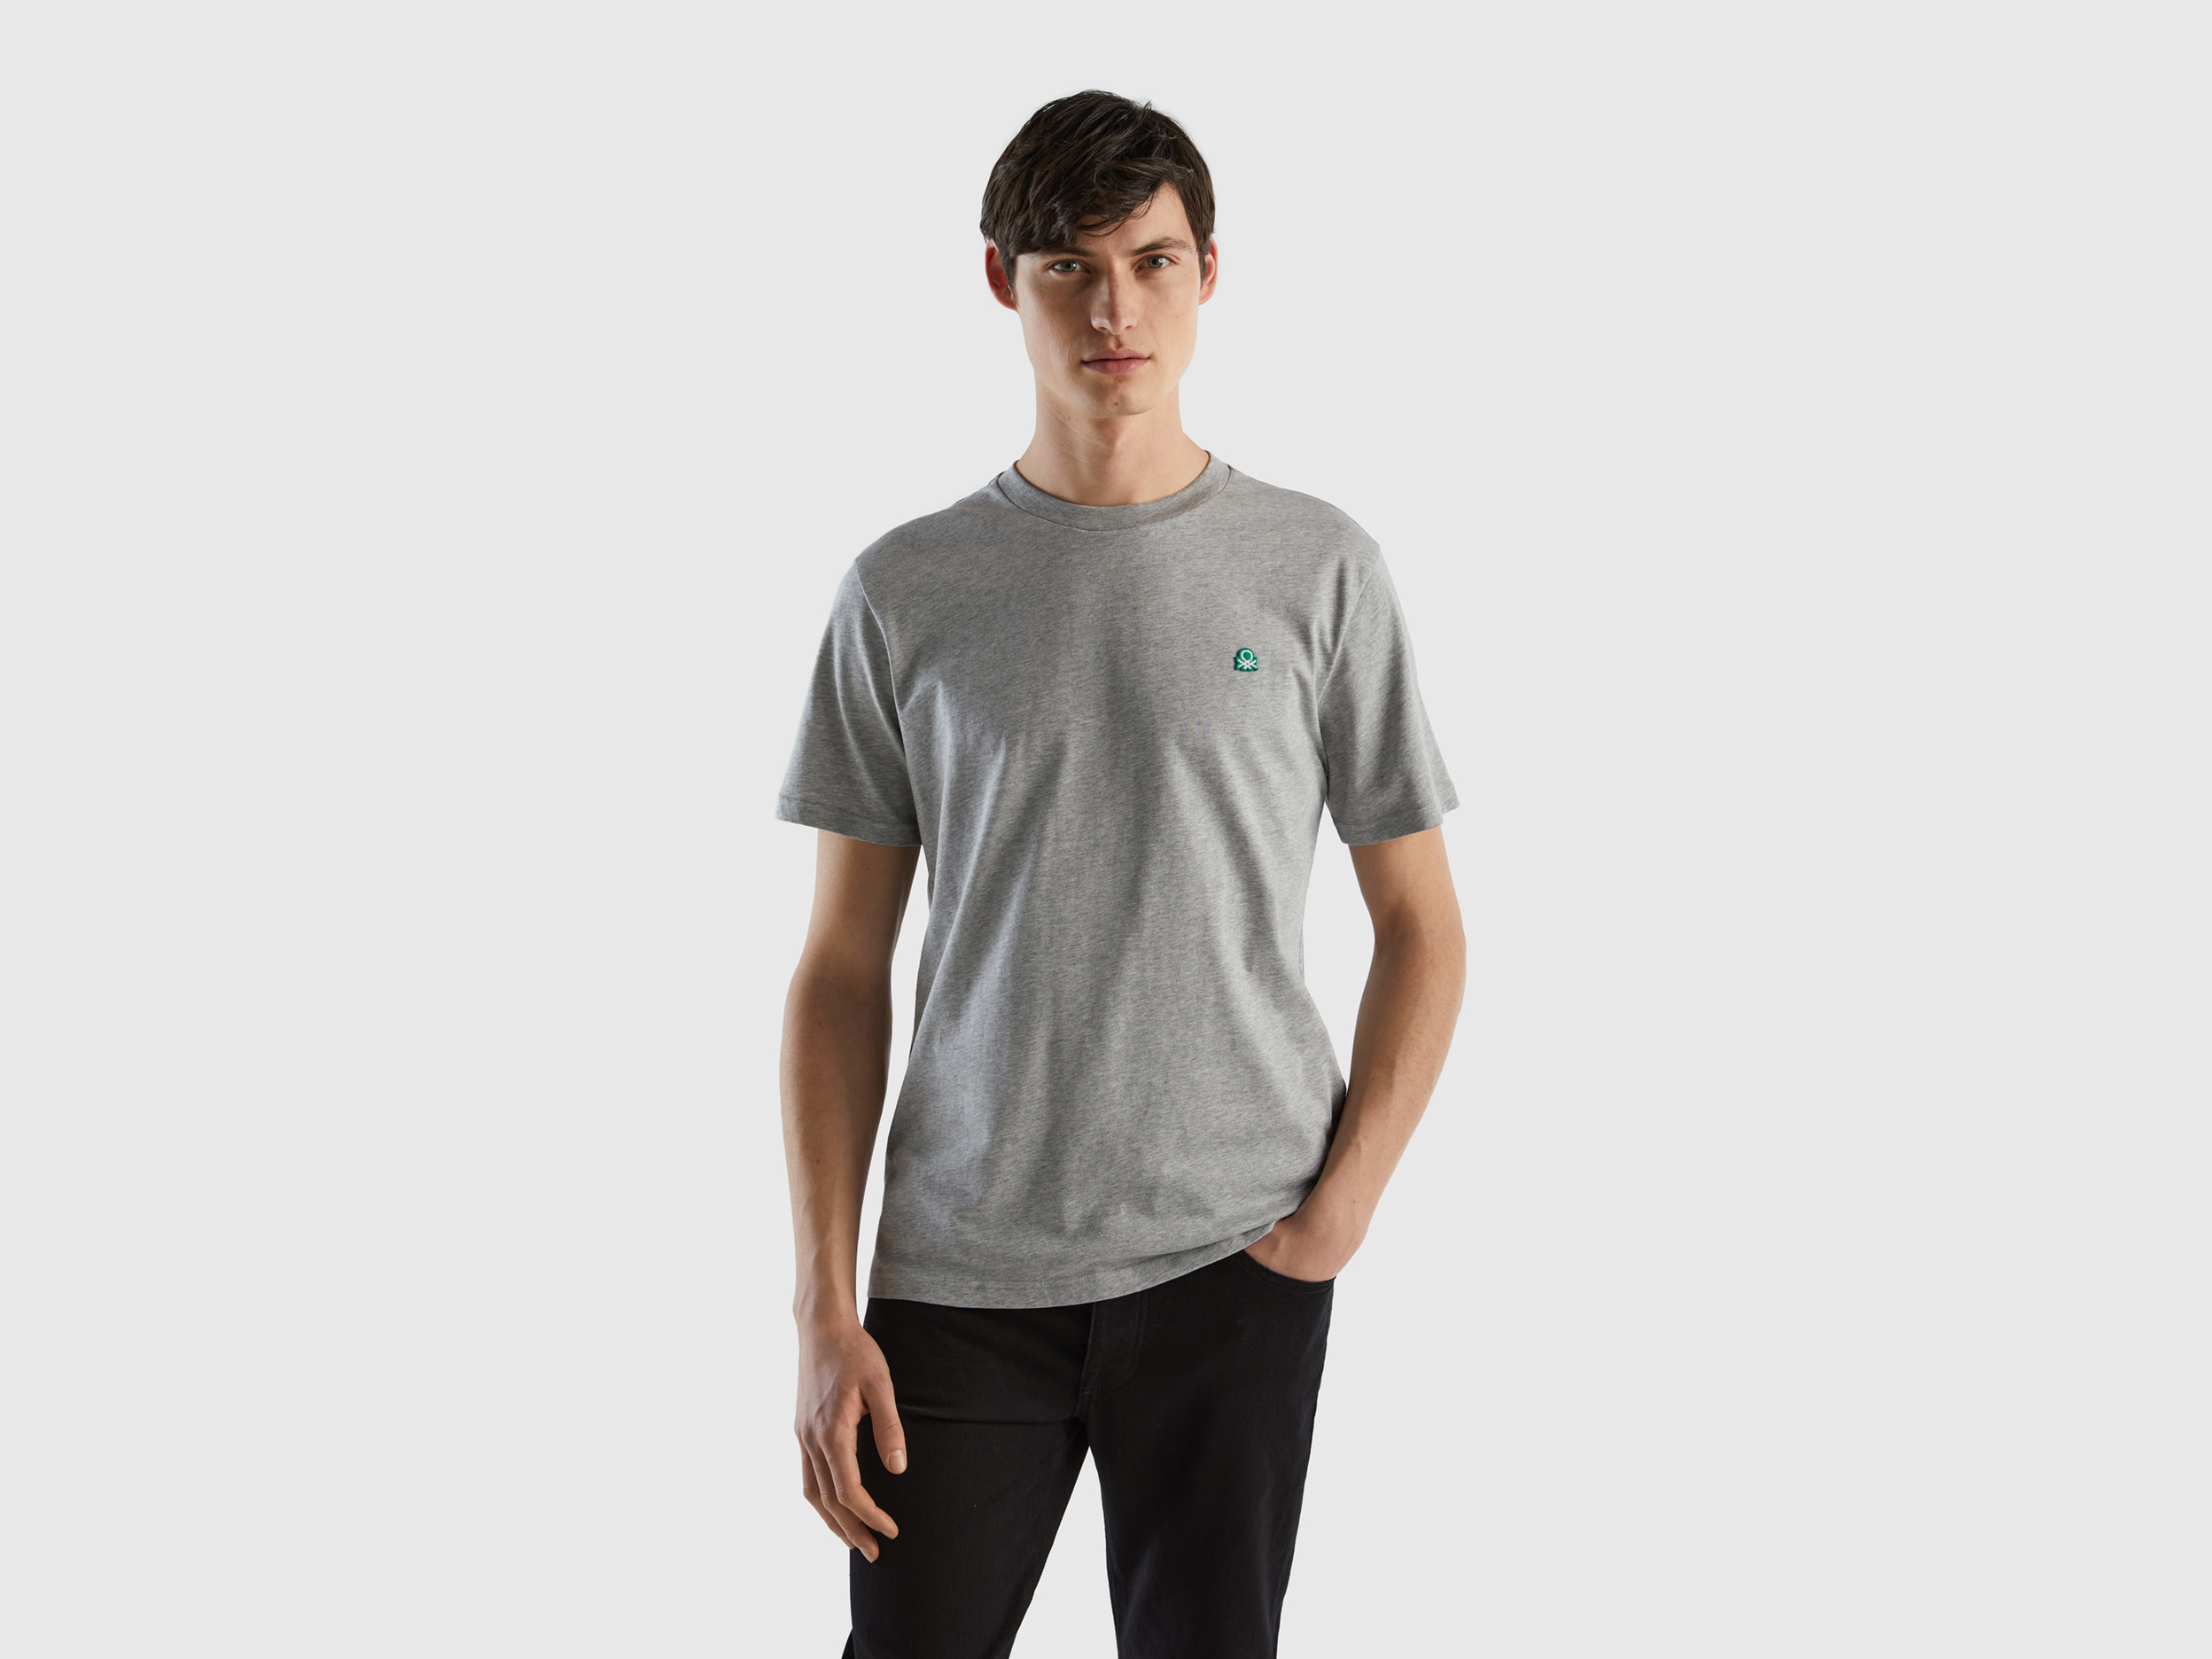 Image of Benetton, 100% Organic Cotton Basic T-shirt, size S, Light Gray, Men